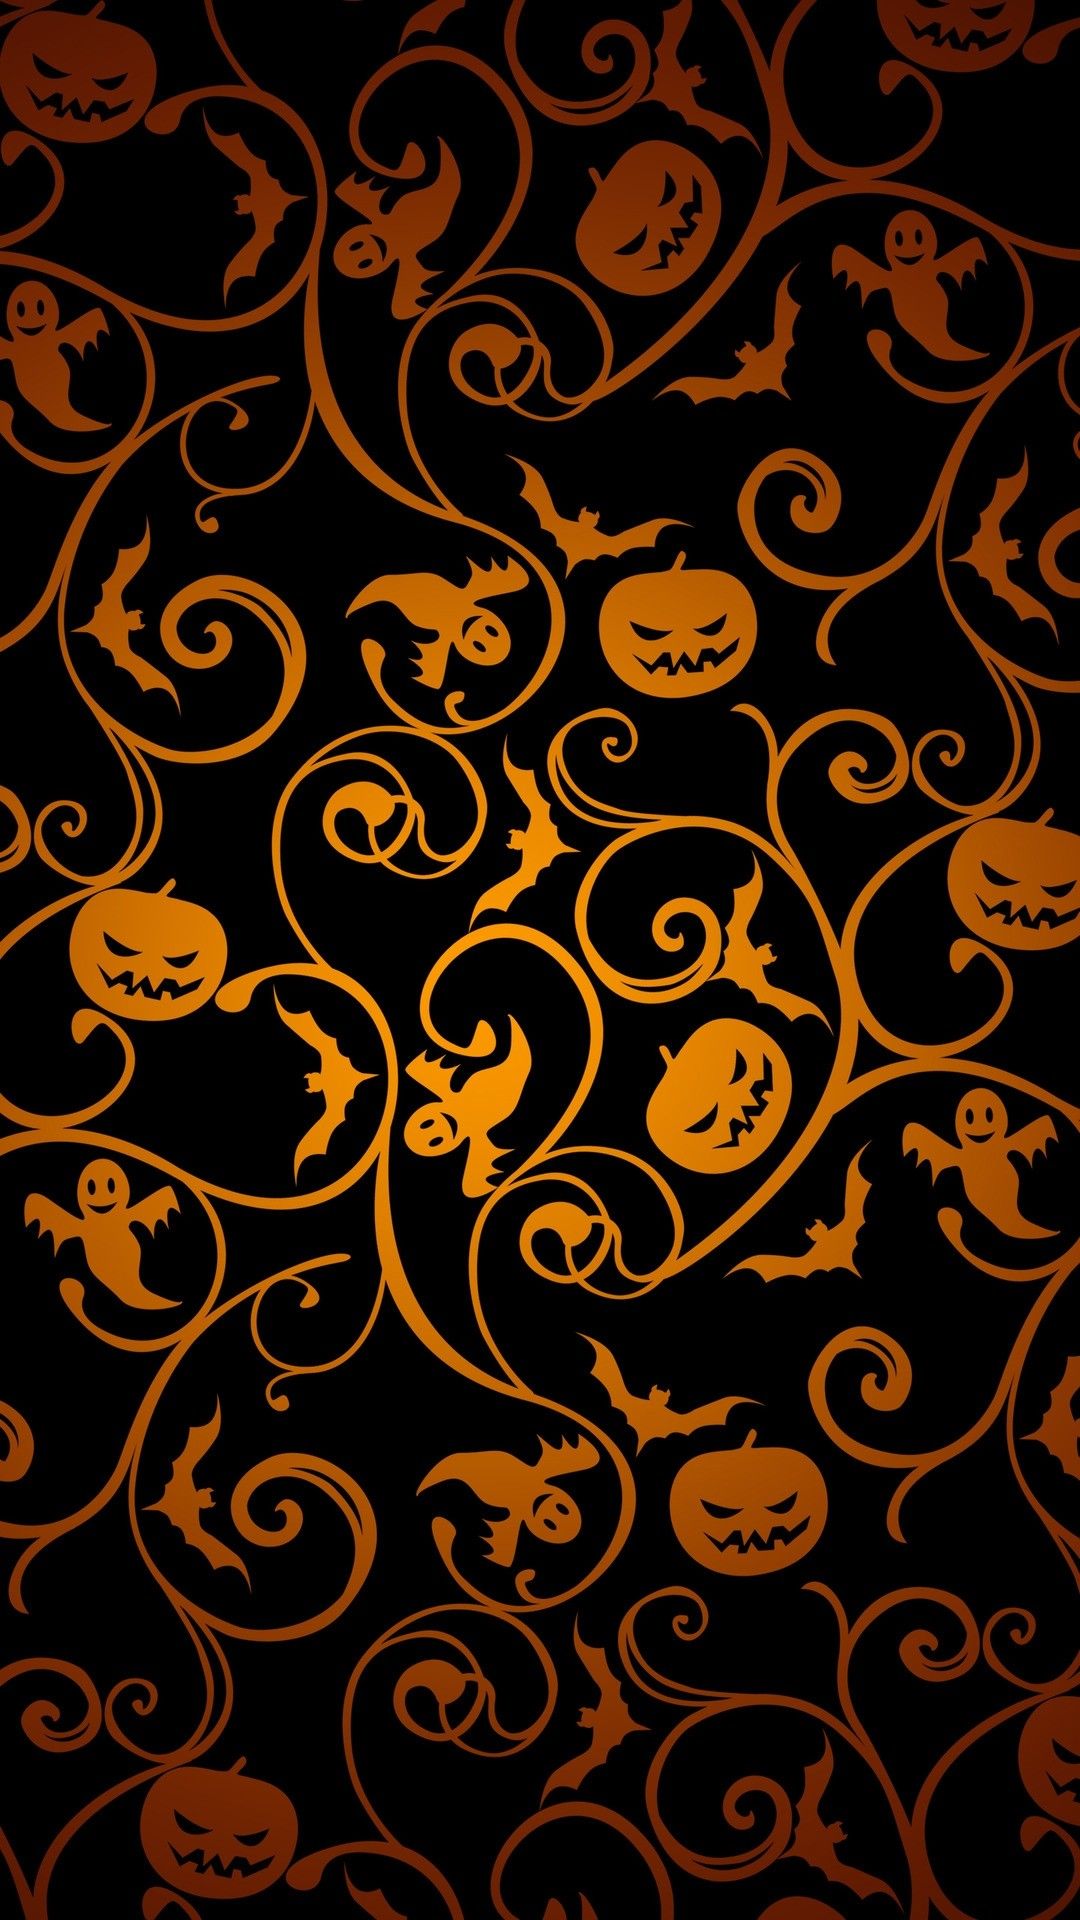 A halloween themed background with pumpkins and bats - Cute Halloween